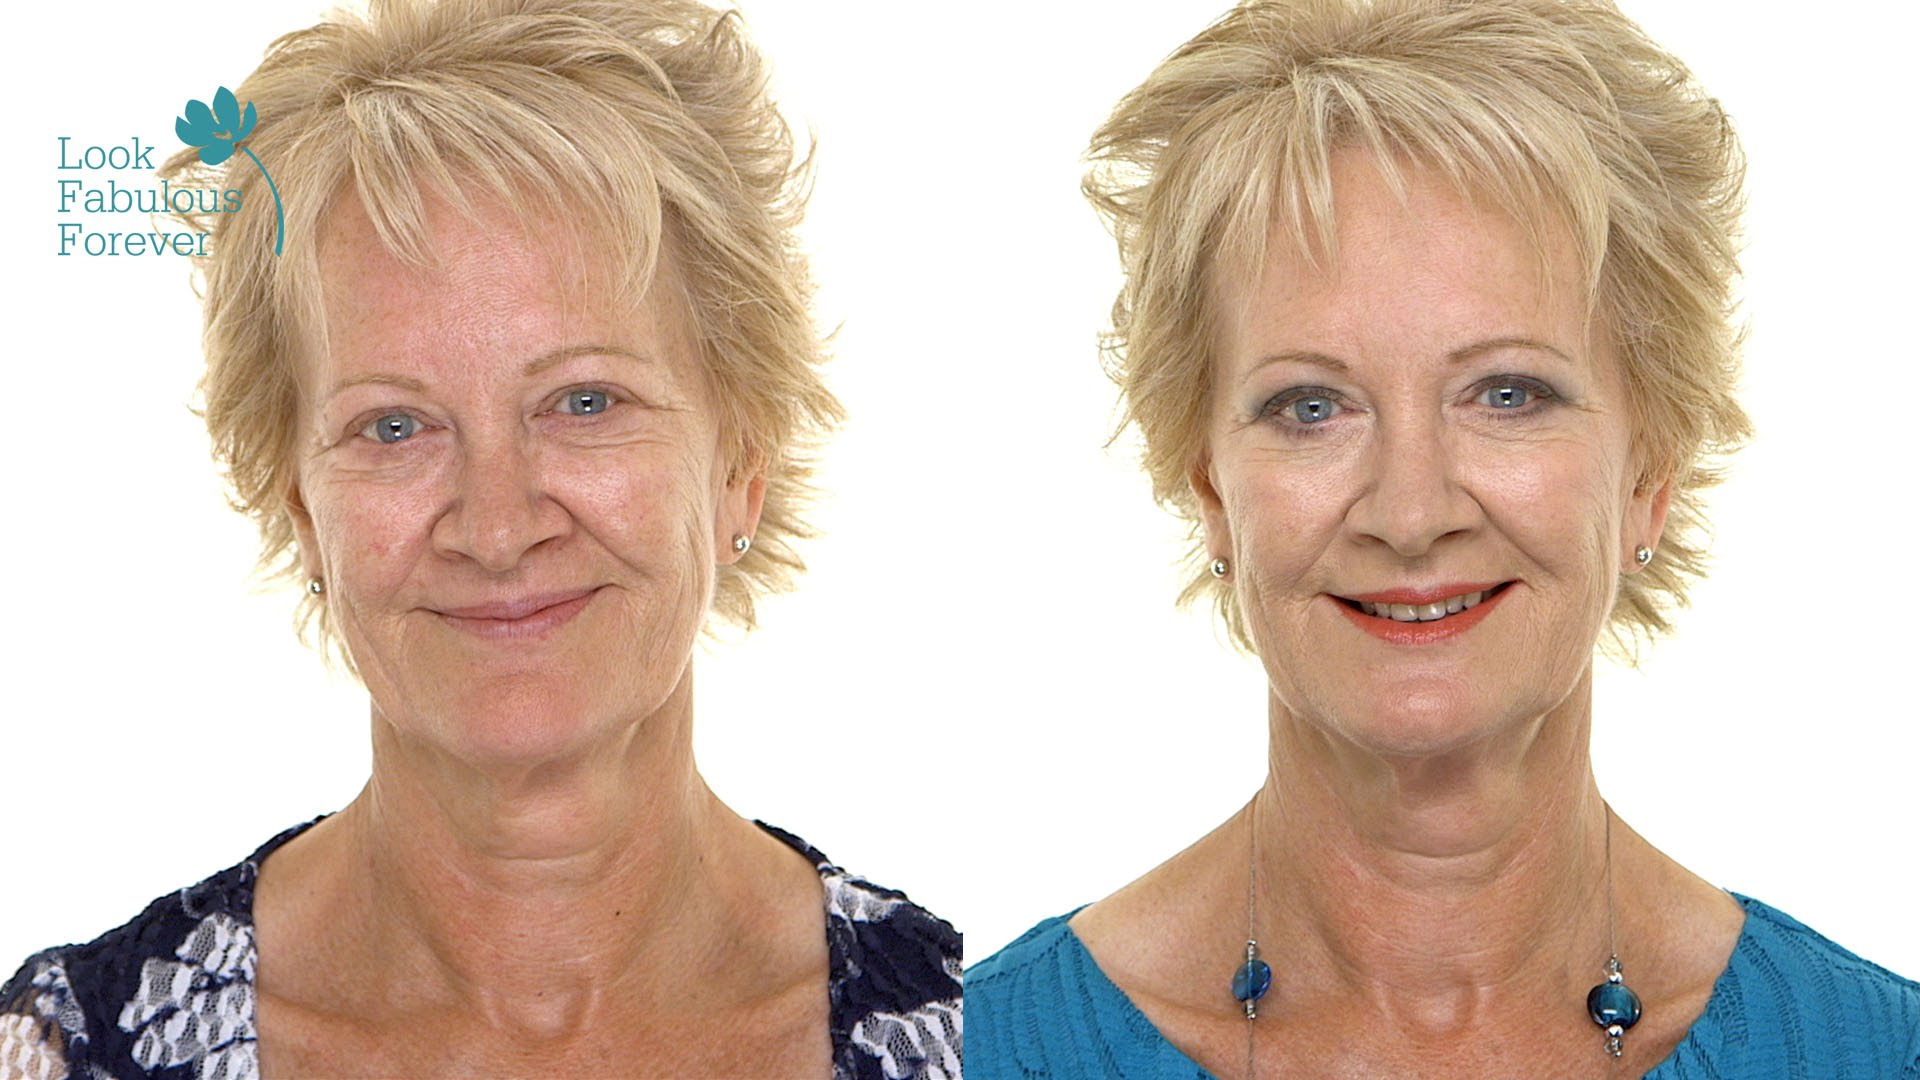 Eye Makeup For Older Women Makeup For Older Women Transformational Makeup For Over 50s Fabis50